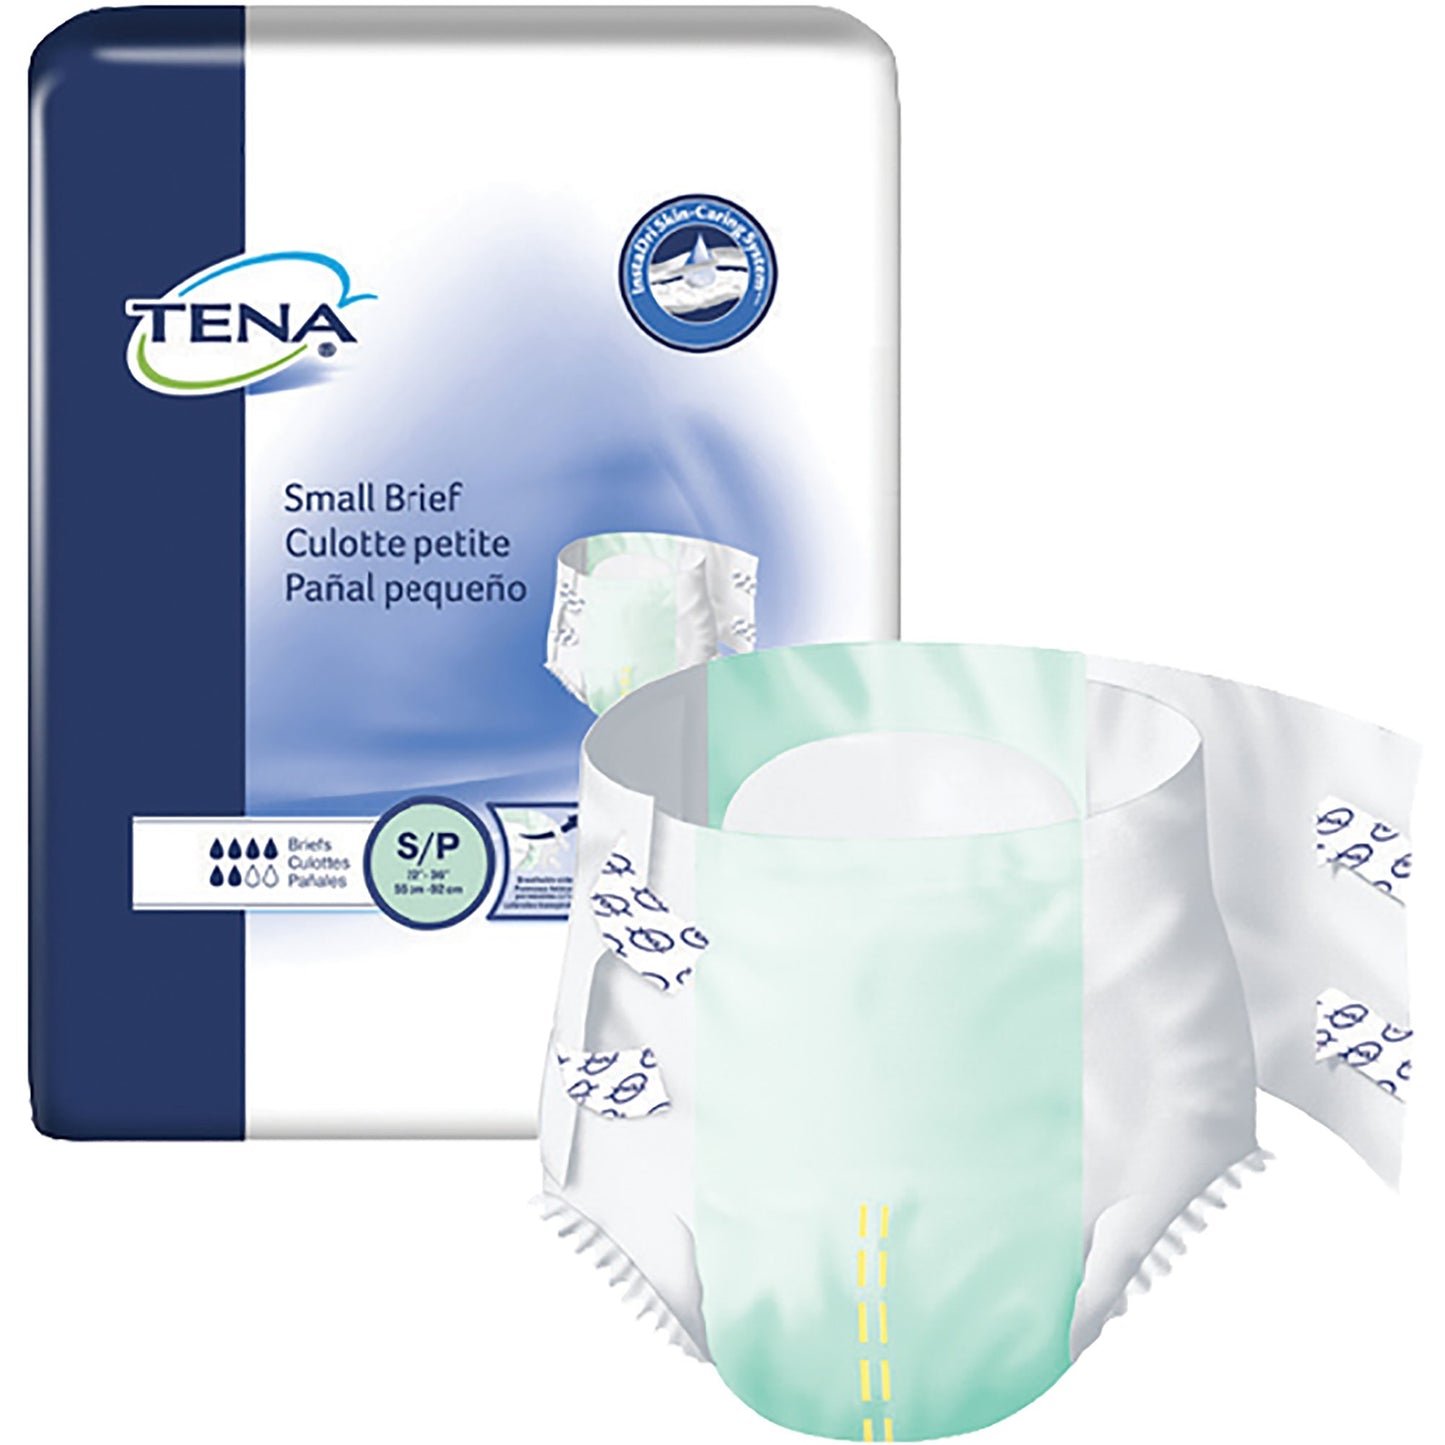 Tena® Small Brief Moderate to Heavy Incontinence Brief, Small, 12 ct